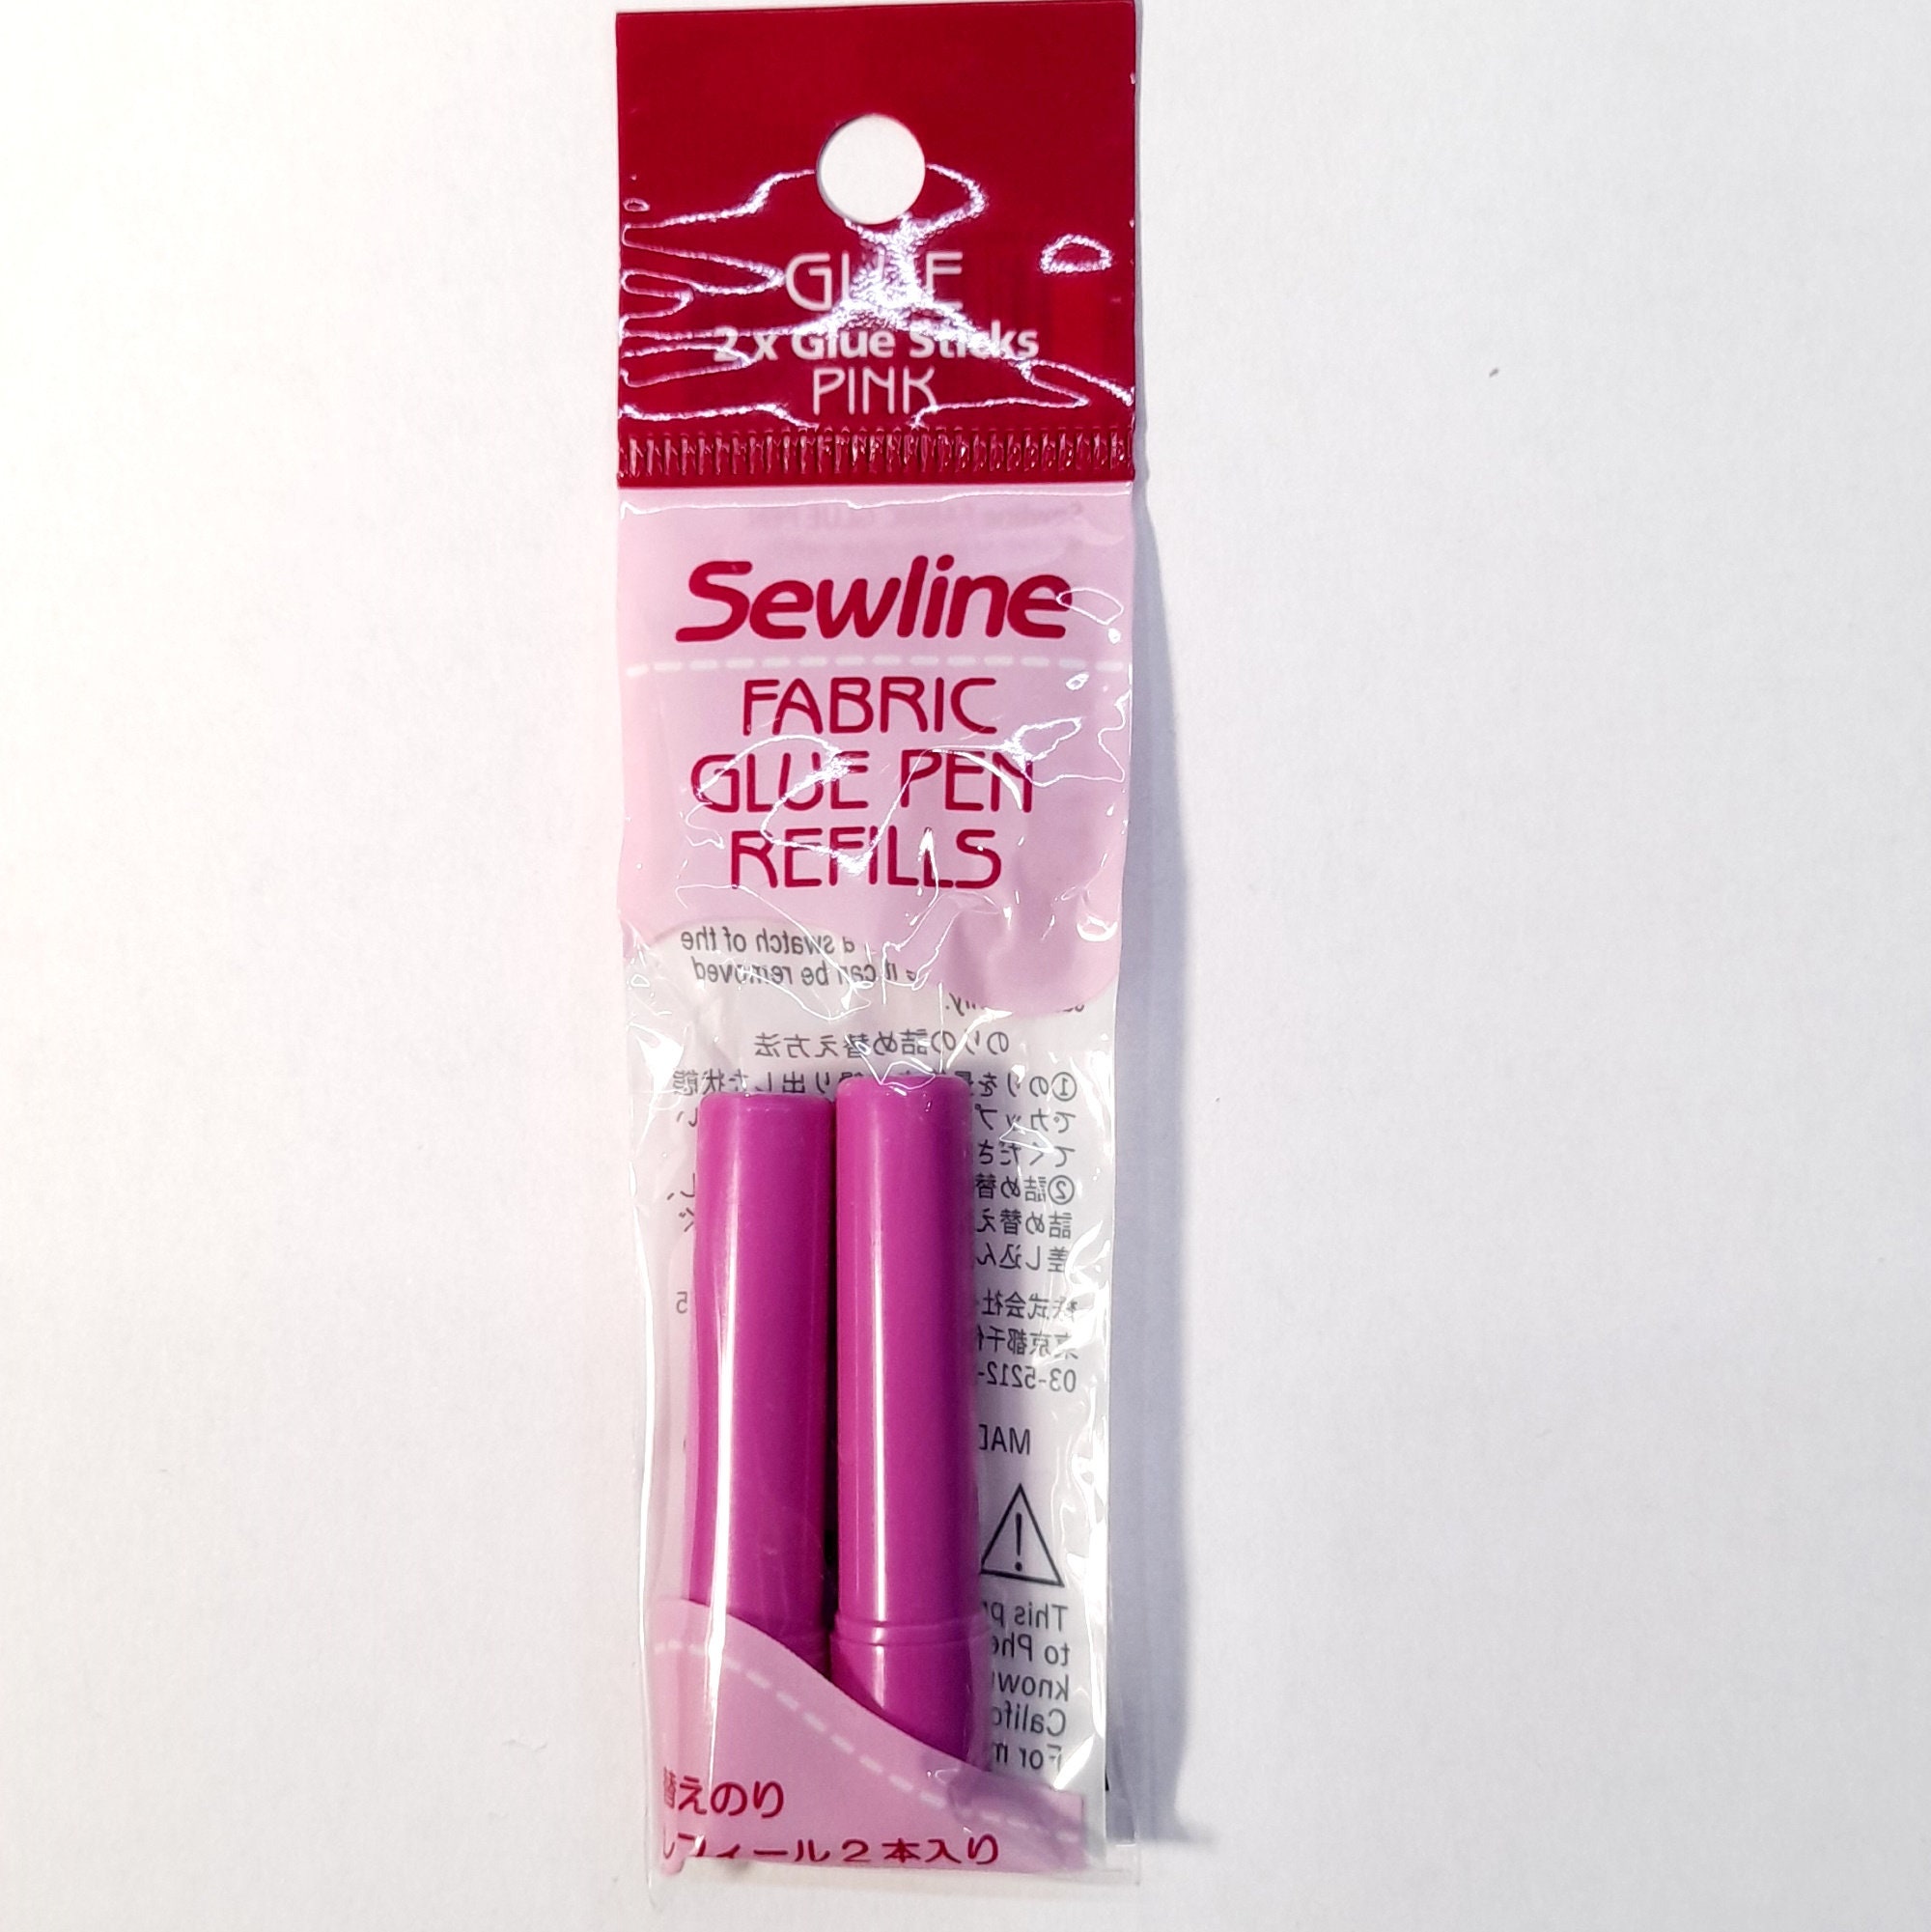 Sewline Glue Pen Refill Blue EPP English Paper Piecing Baste Fabric Glue 6  Pack FAB50063 